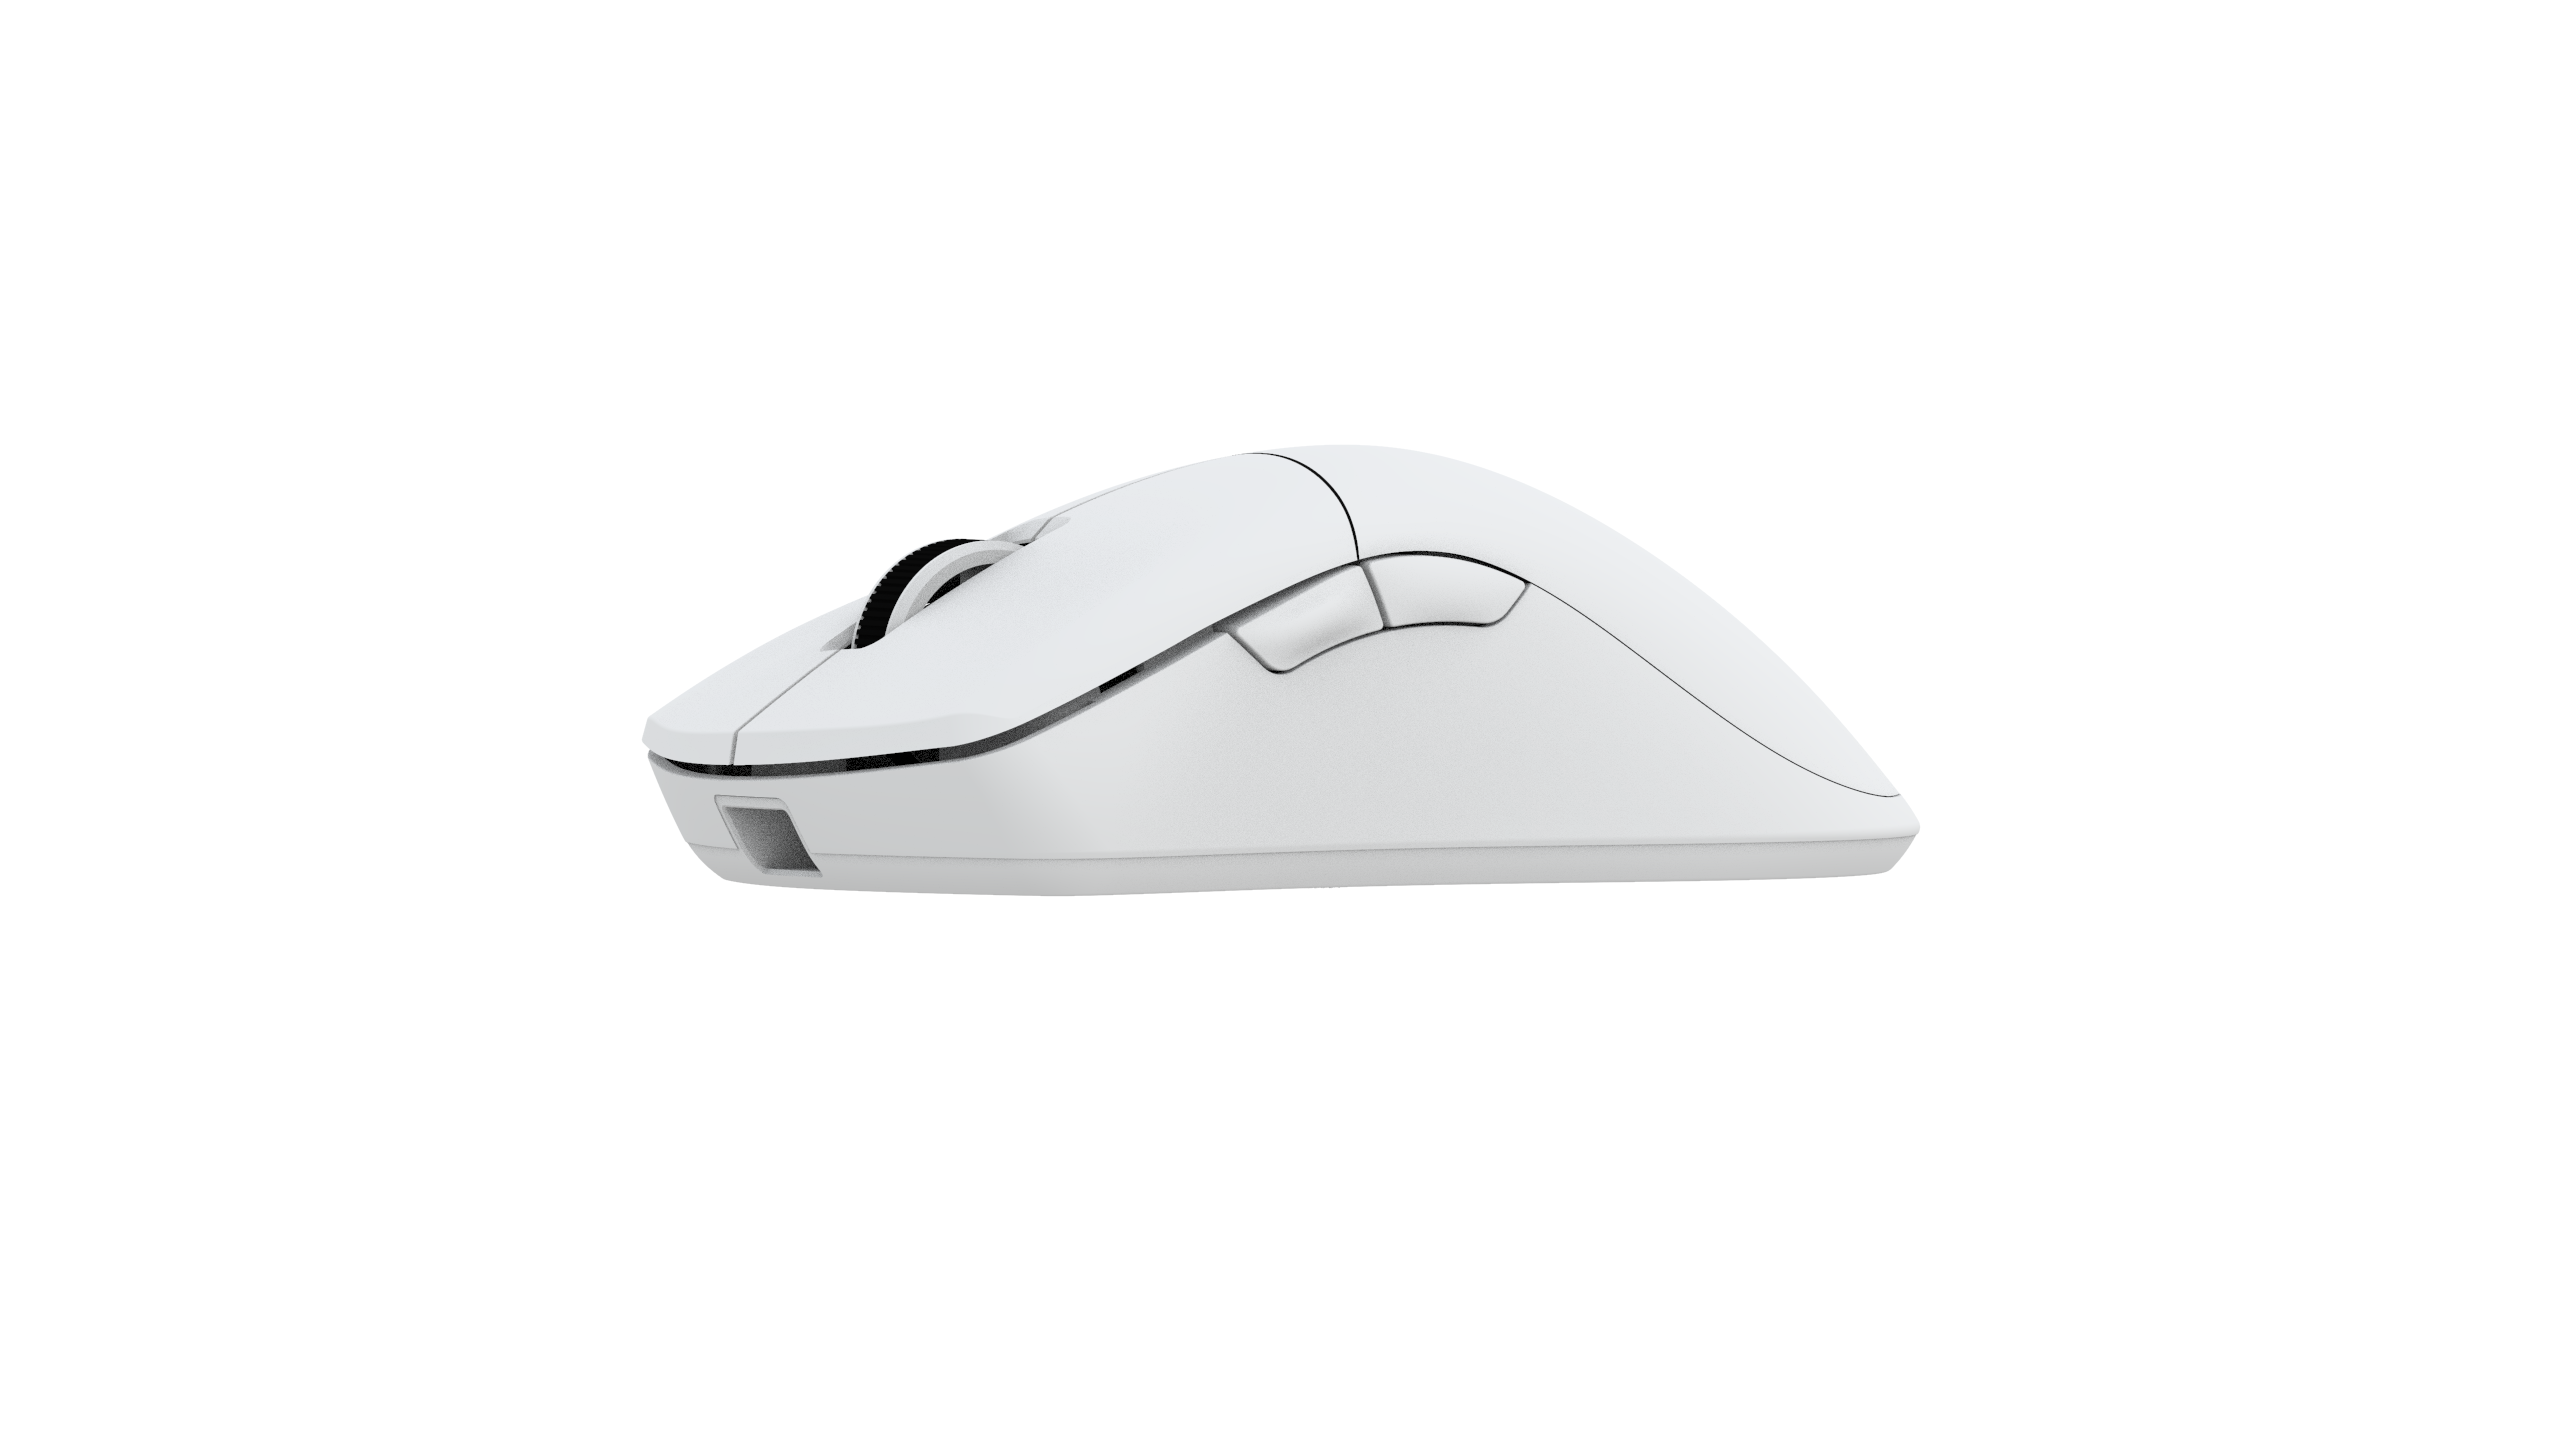 Origin One X Wireless Ultralight Gaming Mouse - White